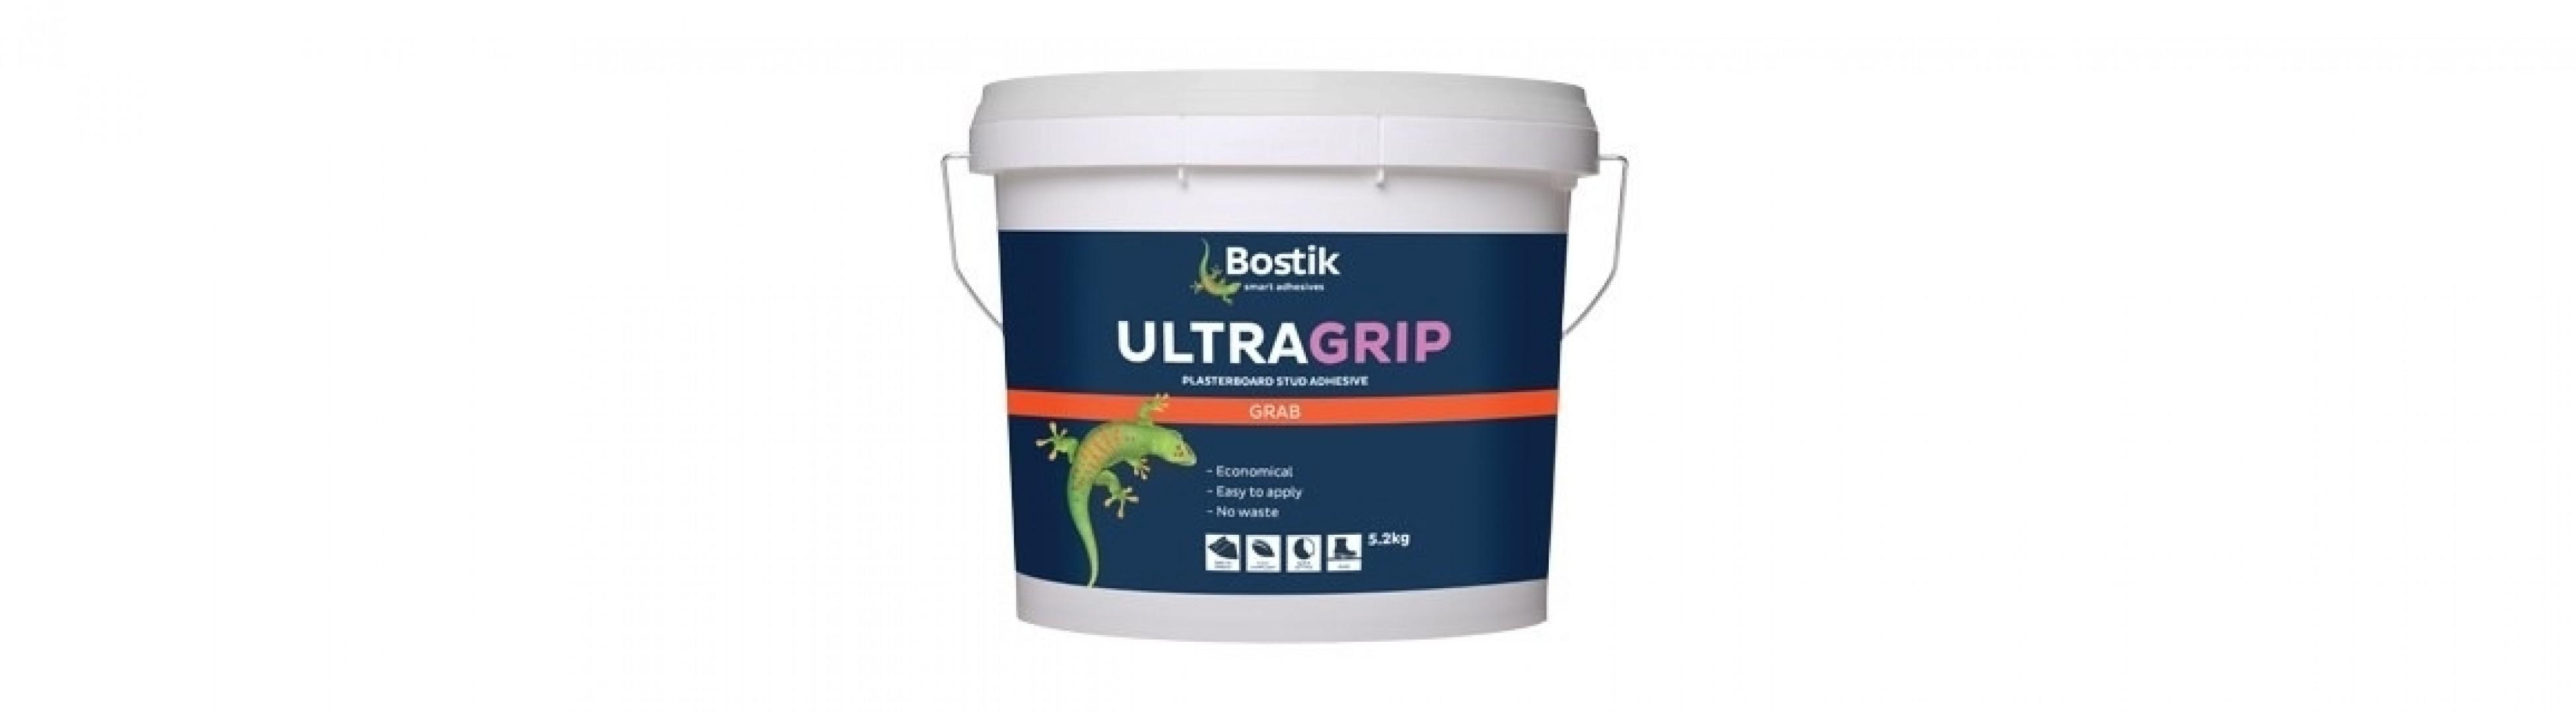 Ultragrip from Bostik